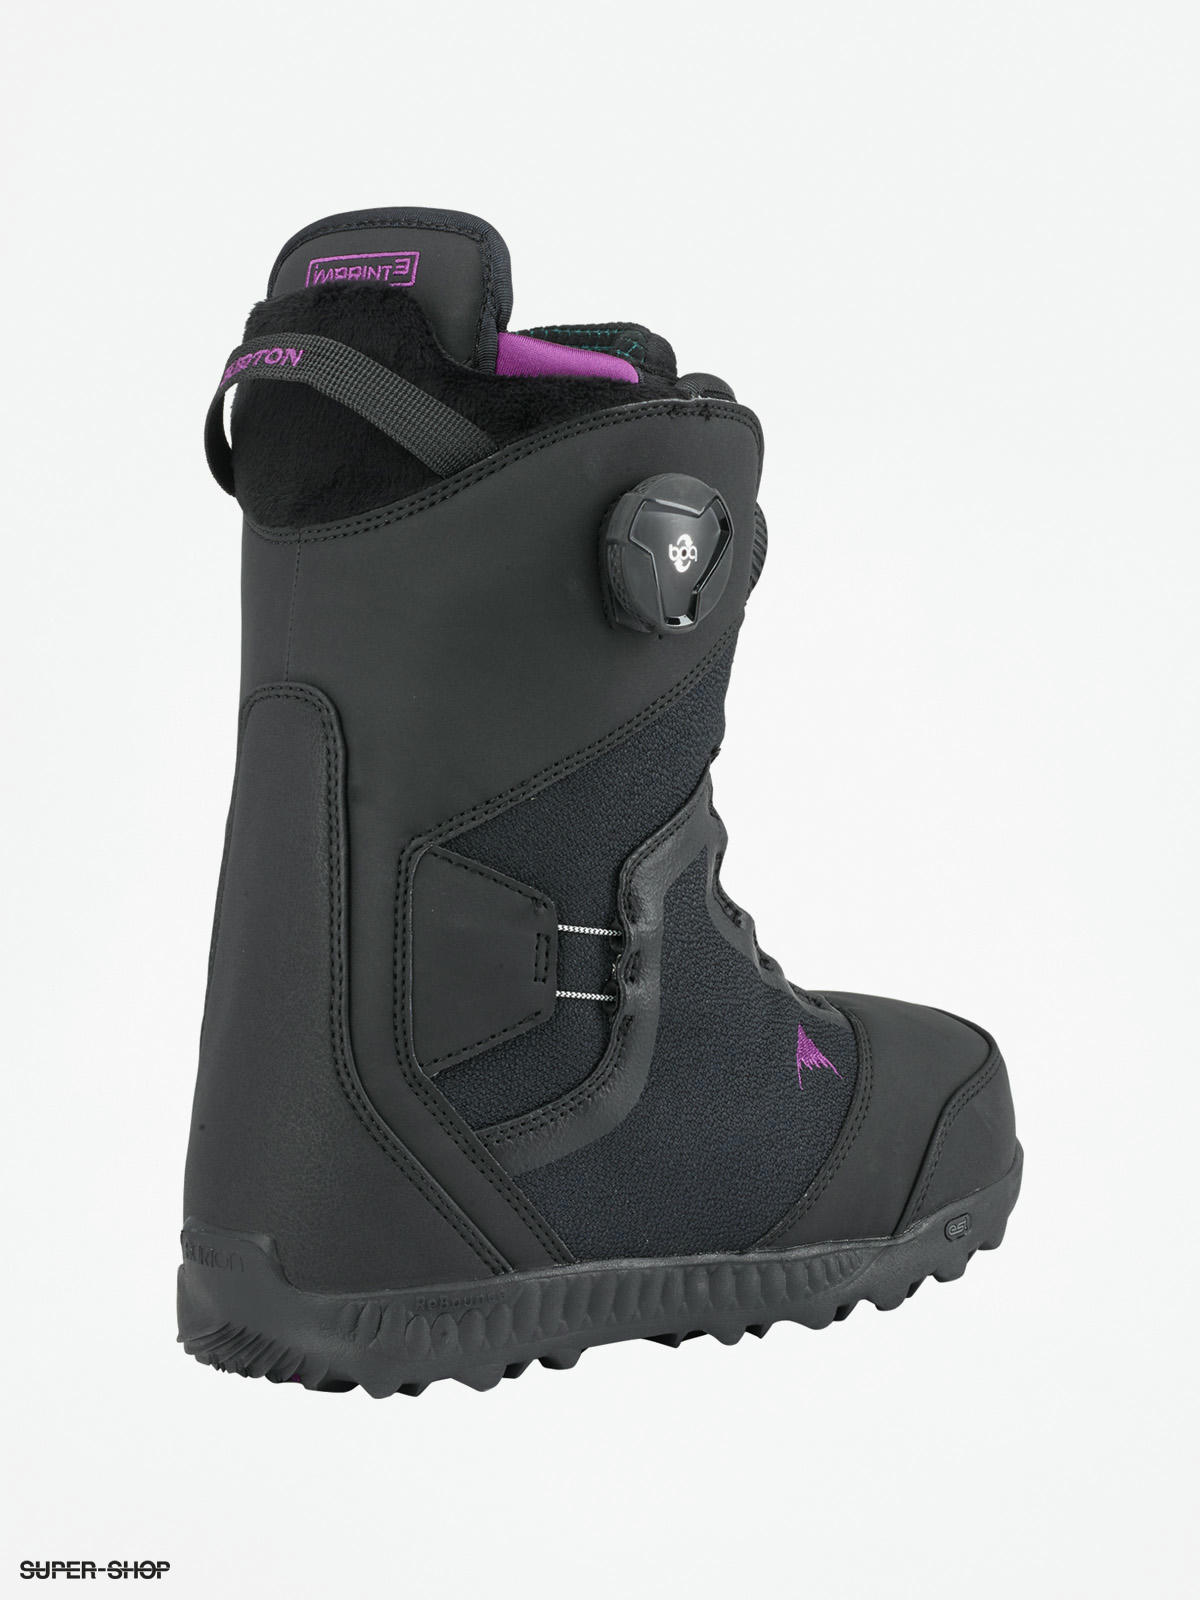 burton felix boa snowboard boots